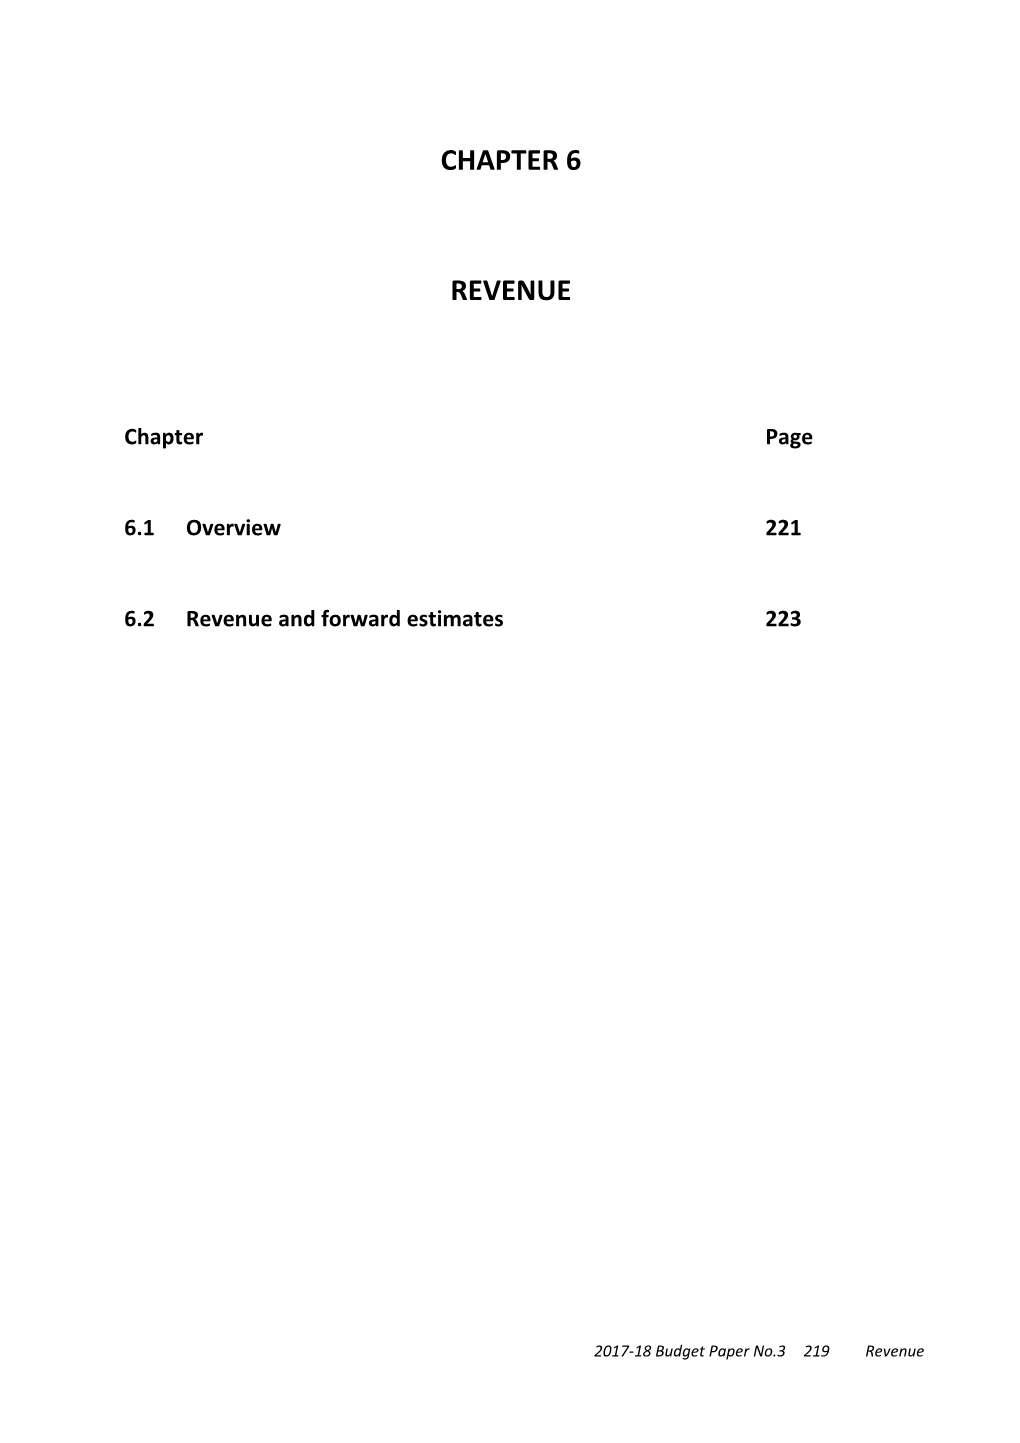 2017-18 Budget Chapter 6 Revenue